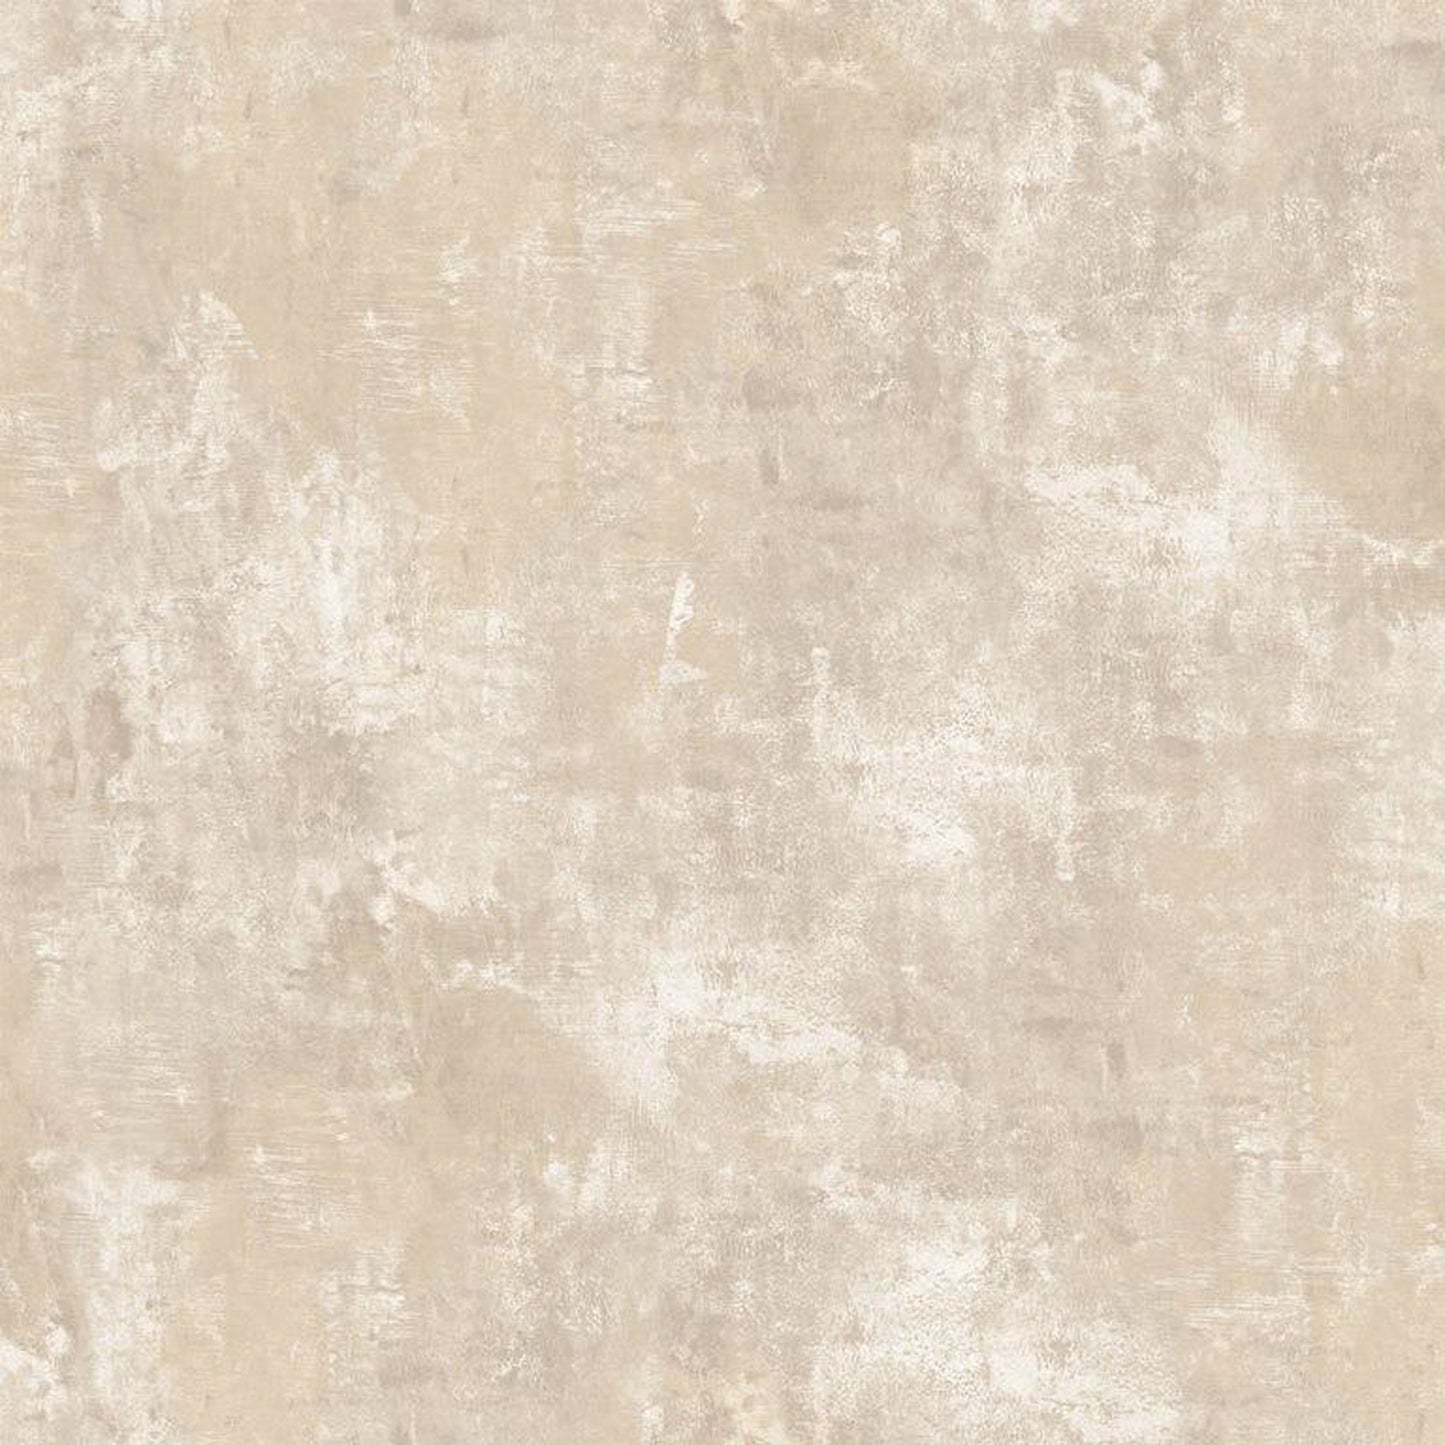 Natural Stone Effect textured Wallpaper